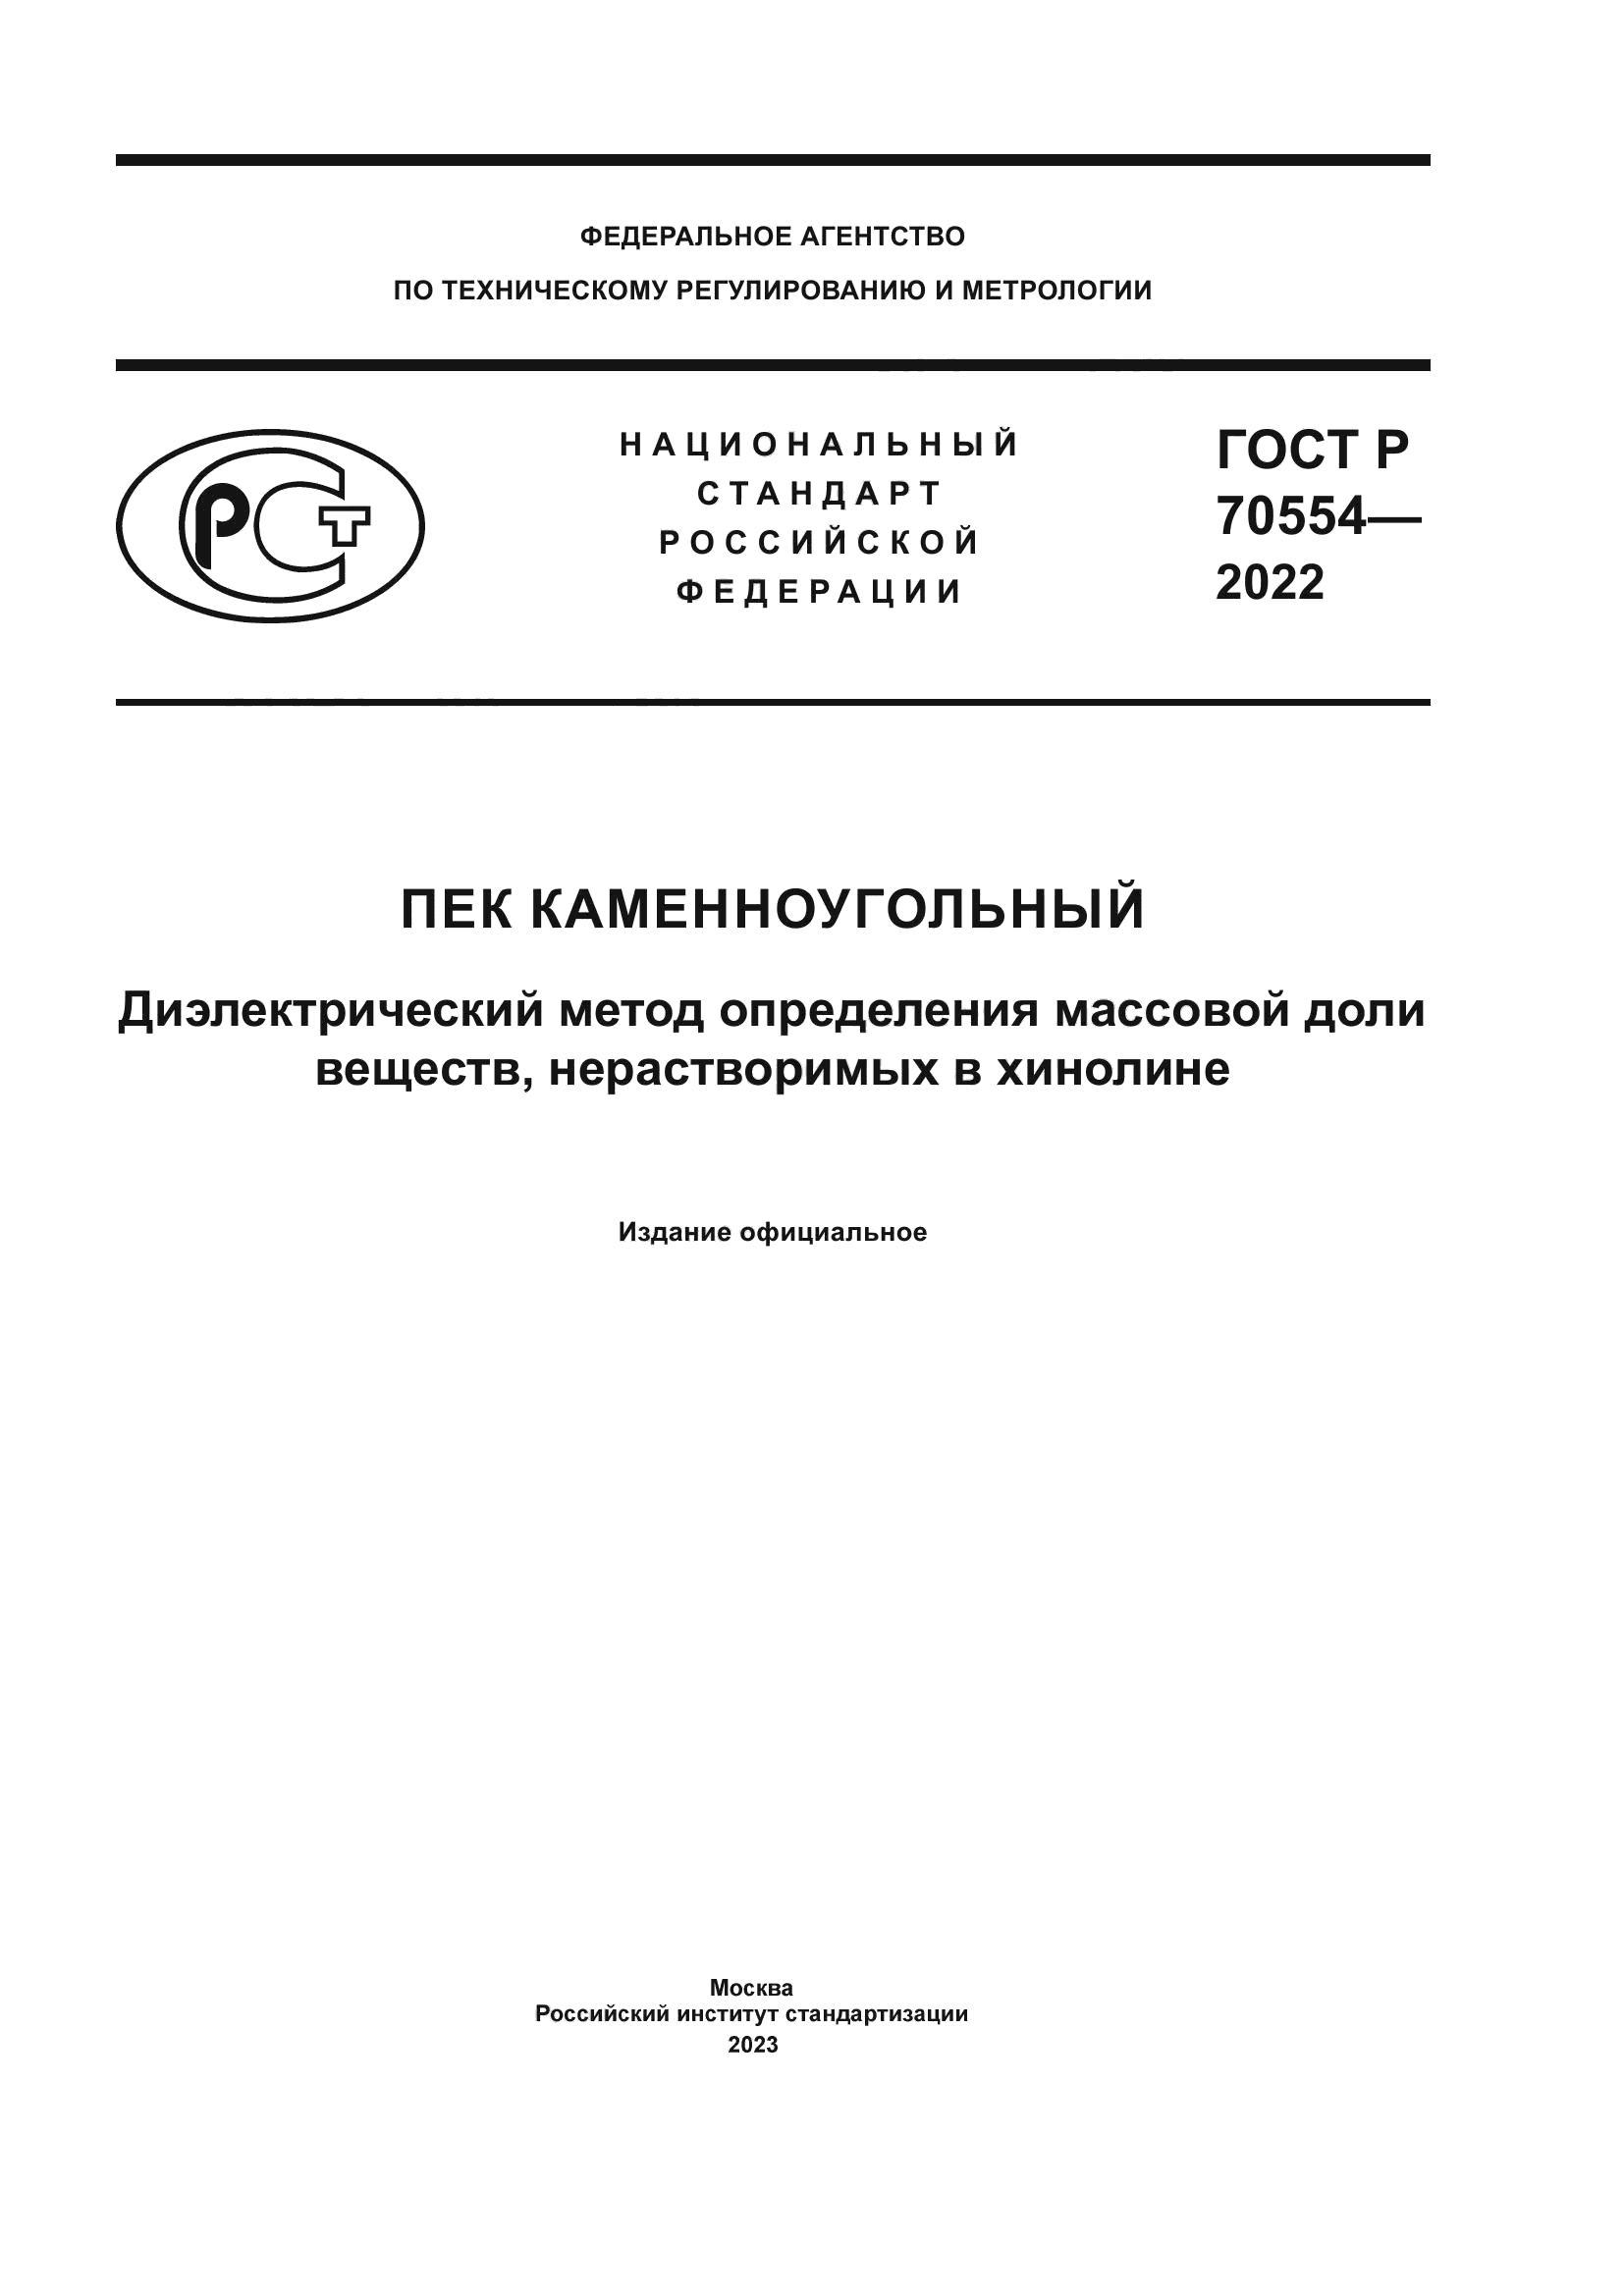 ГОСТ Р 70554-2022